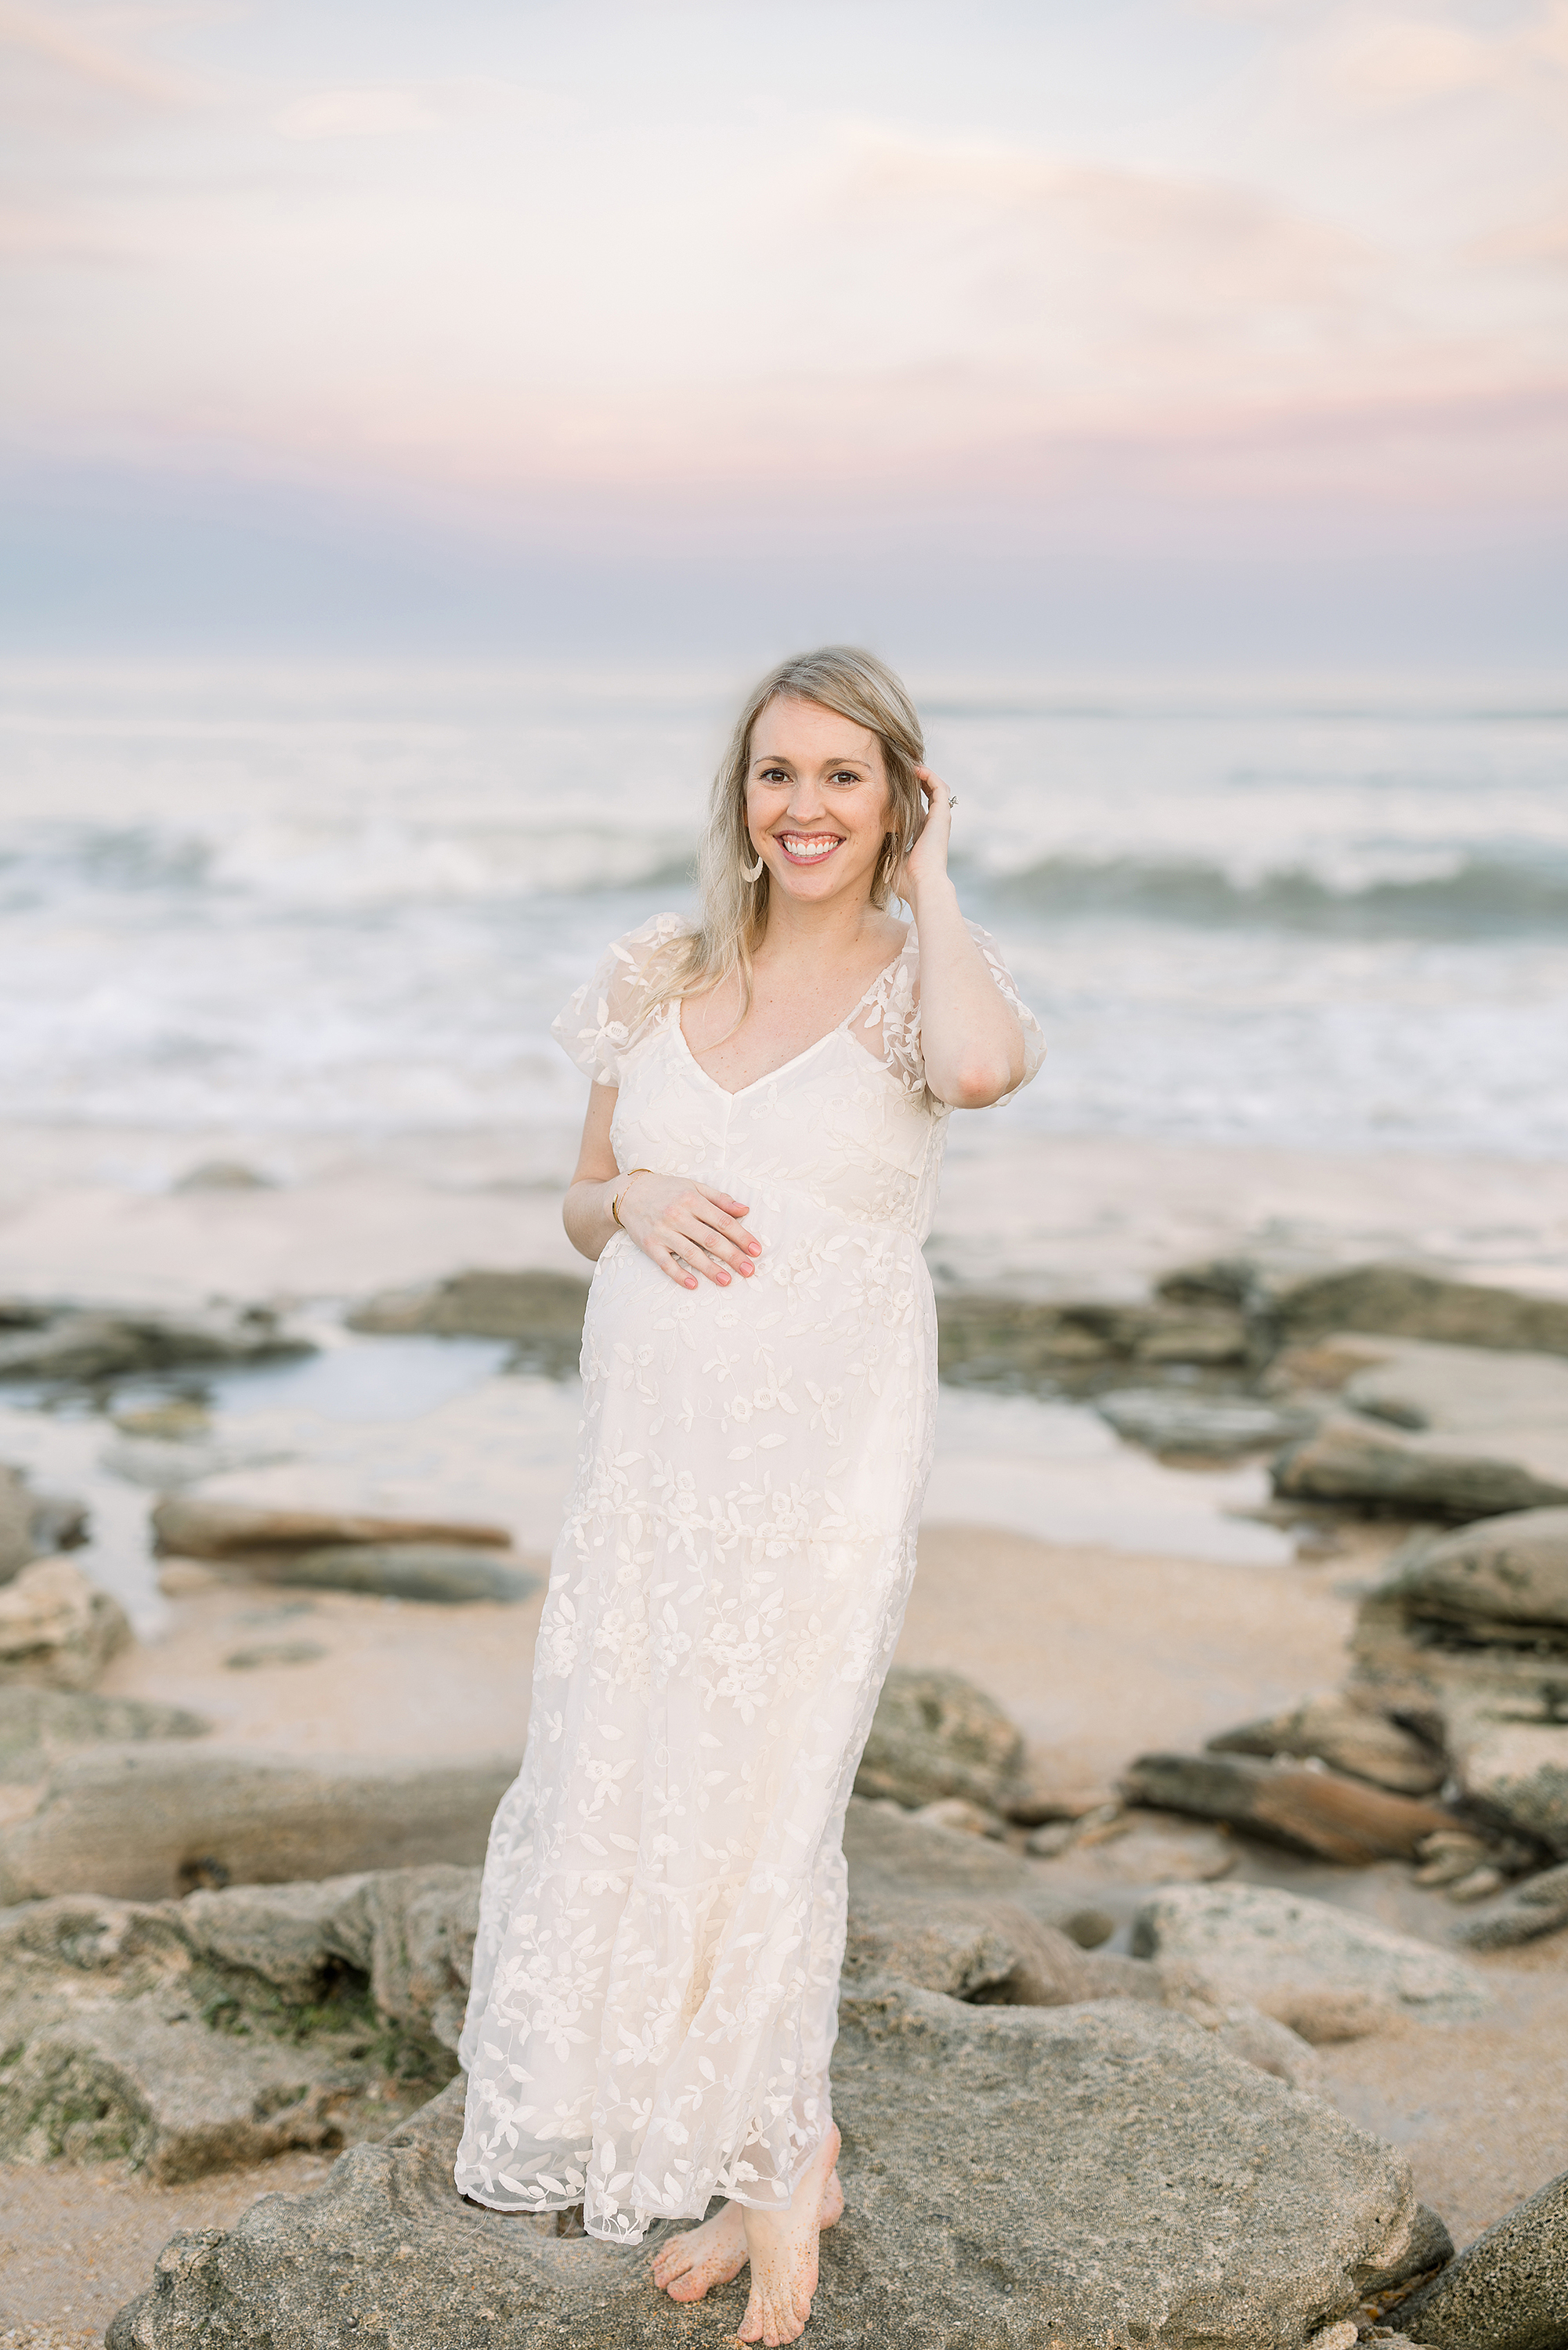 A sunset beach pregnancy portrait of a woman in a cream maxi dress.